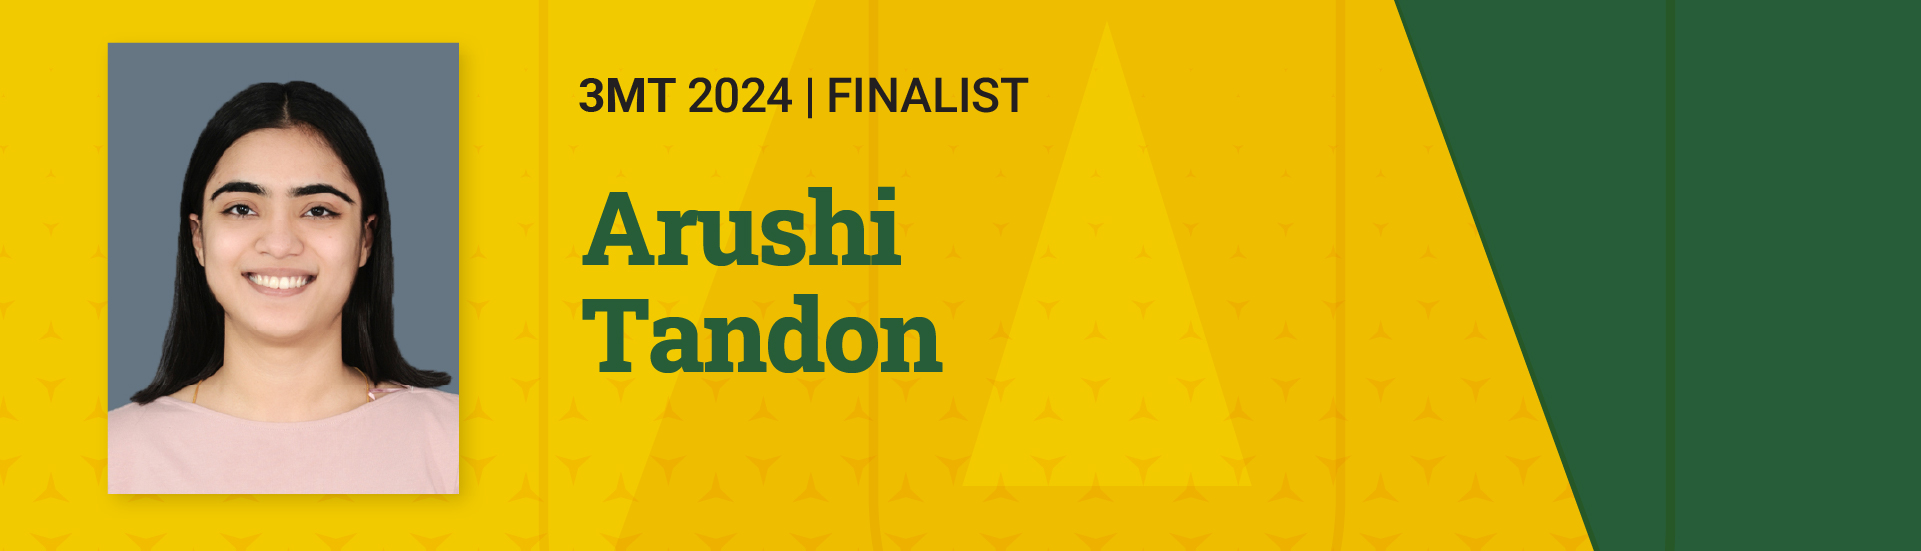 3MT 2024 Finalist Arushi Tandon